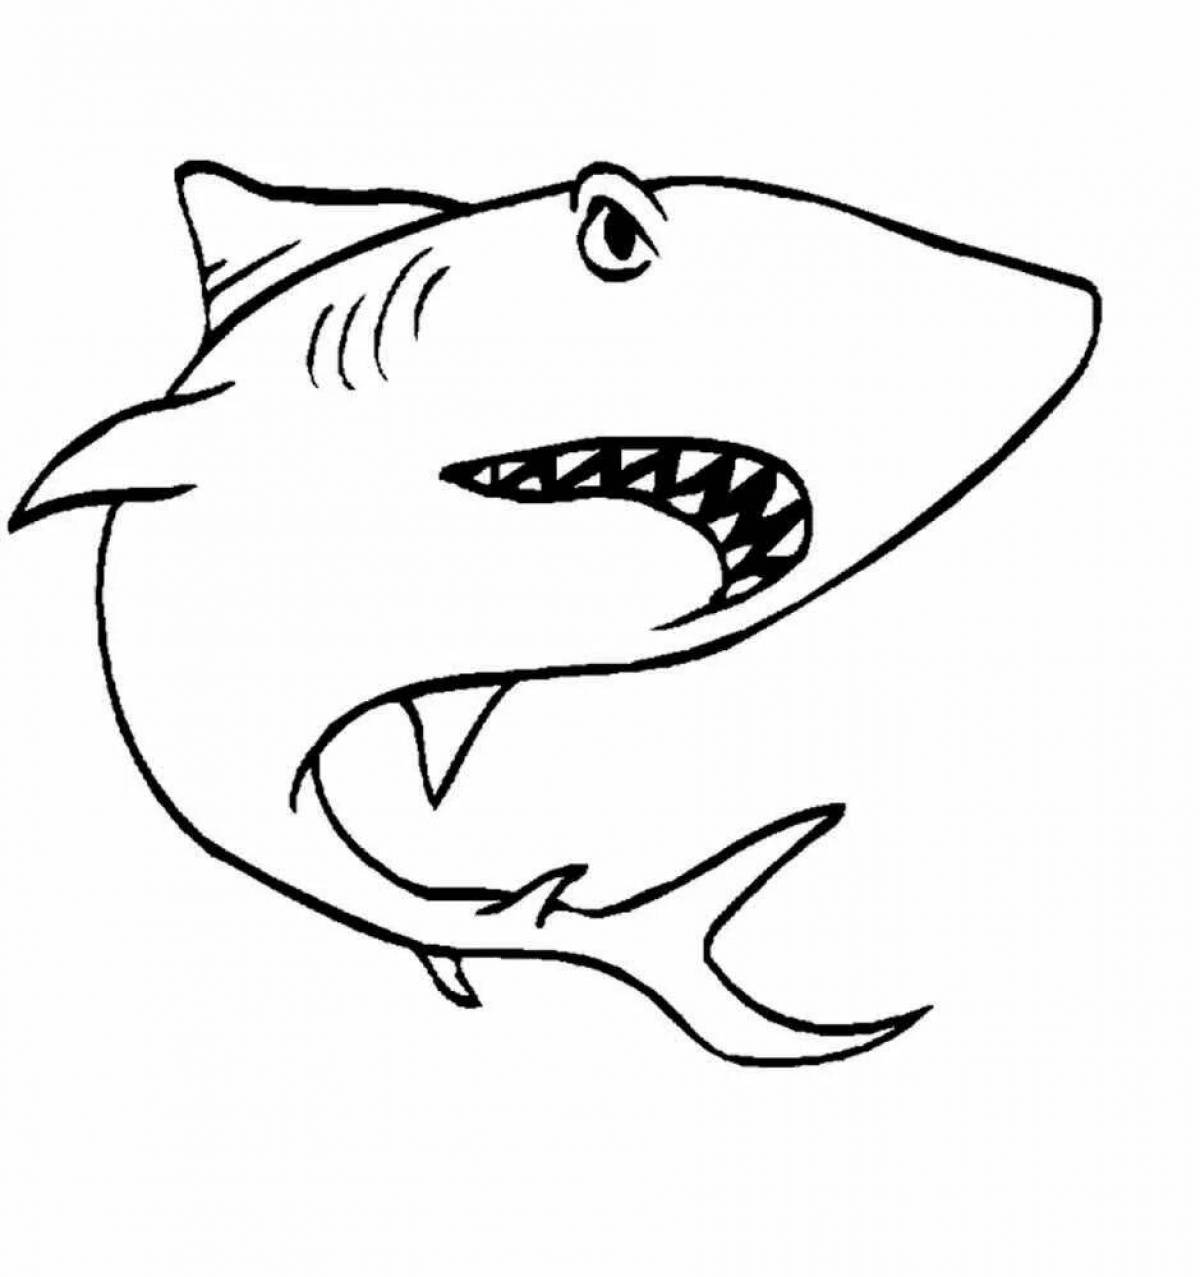 Coloring book cheeky angry shark